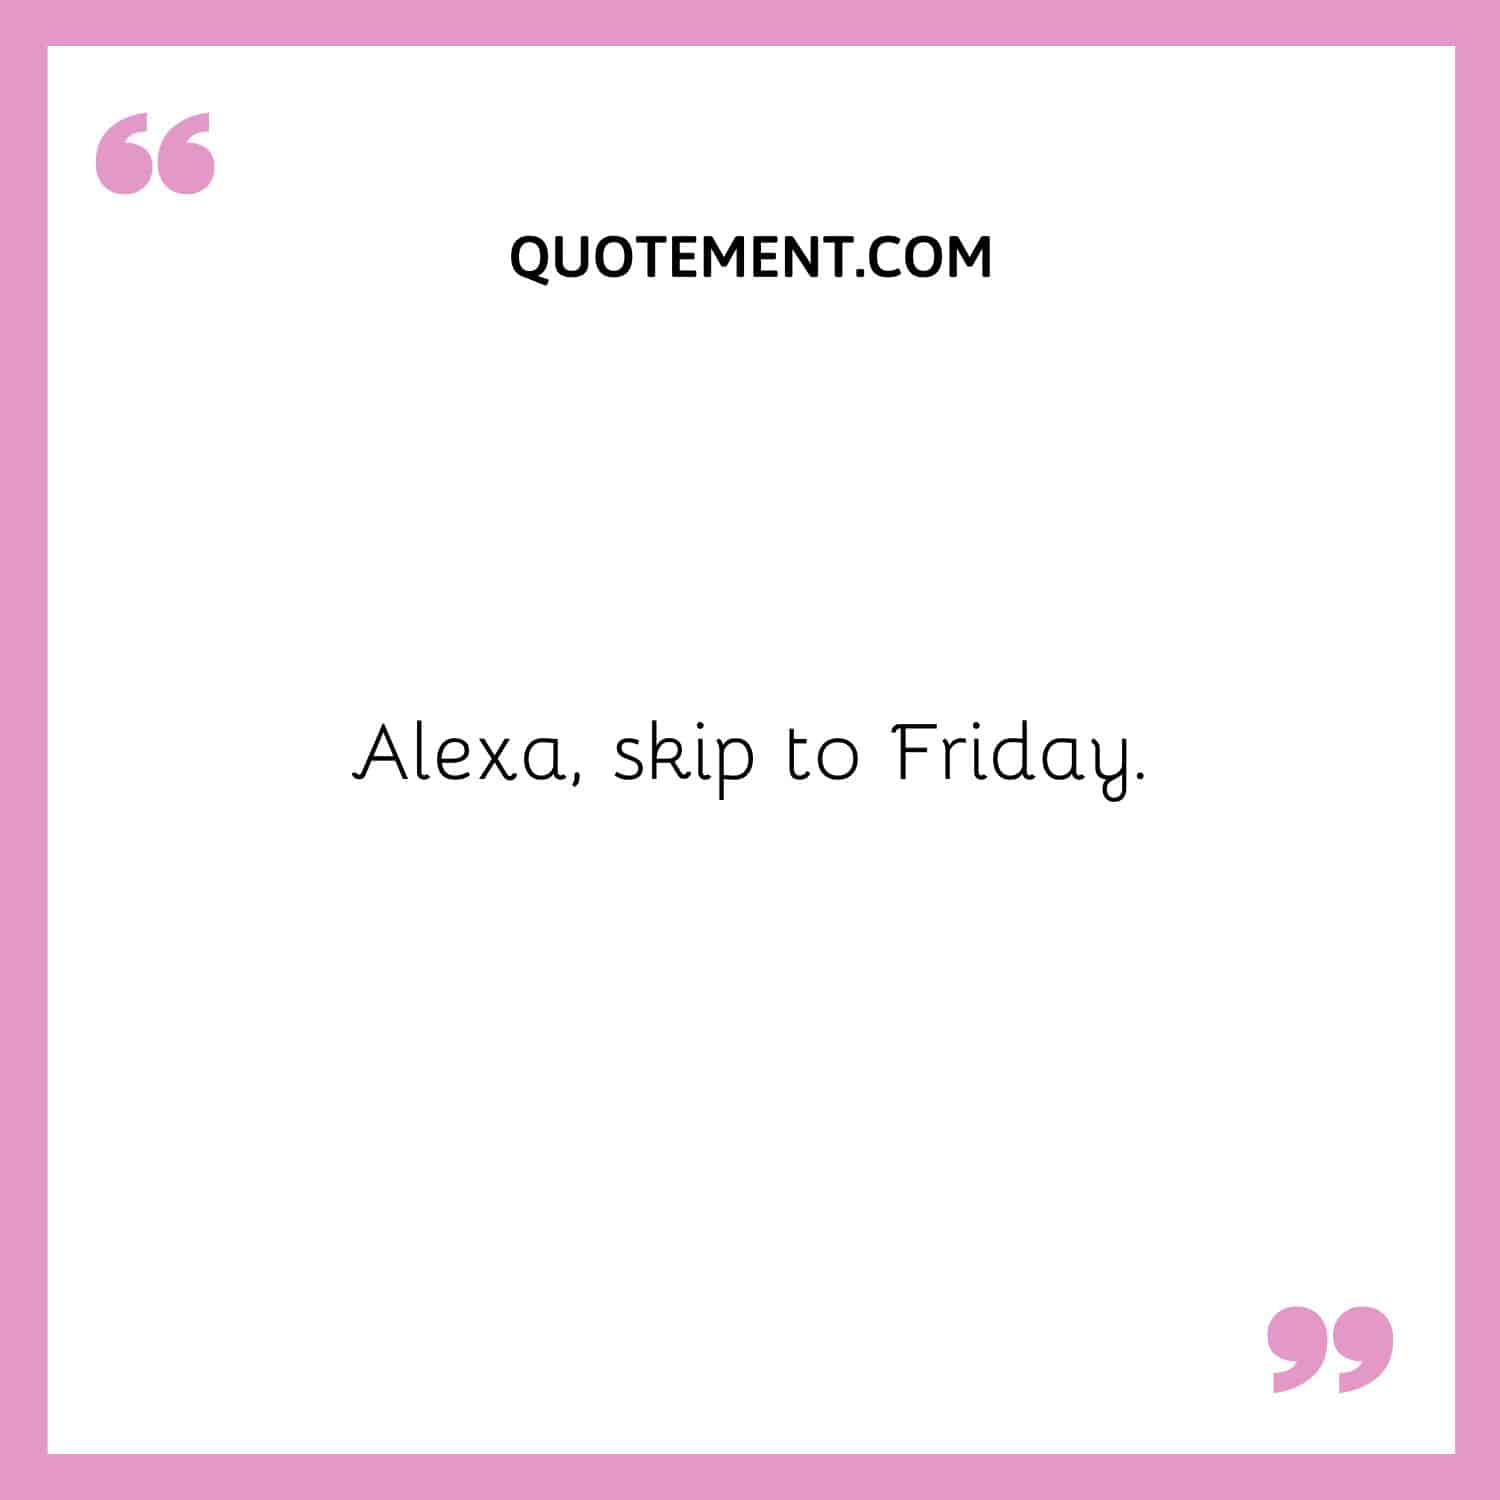 Alexa, skip to Friday.